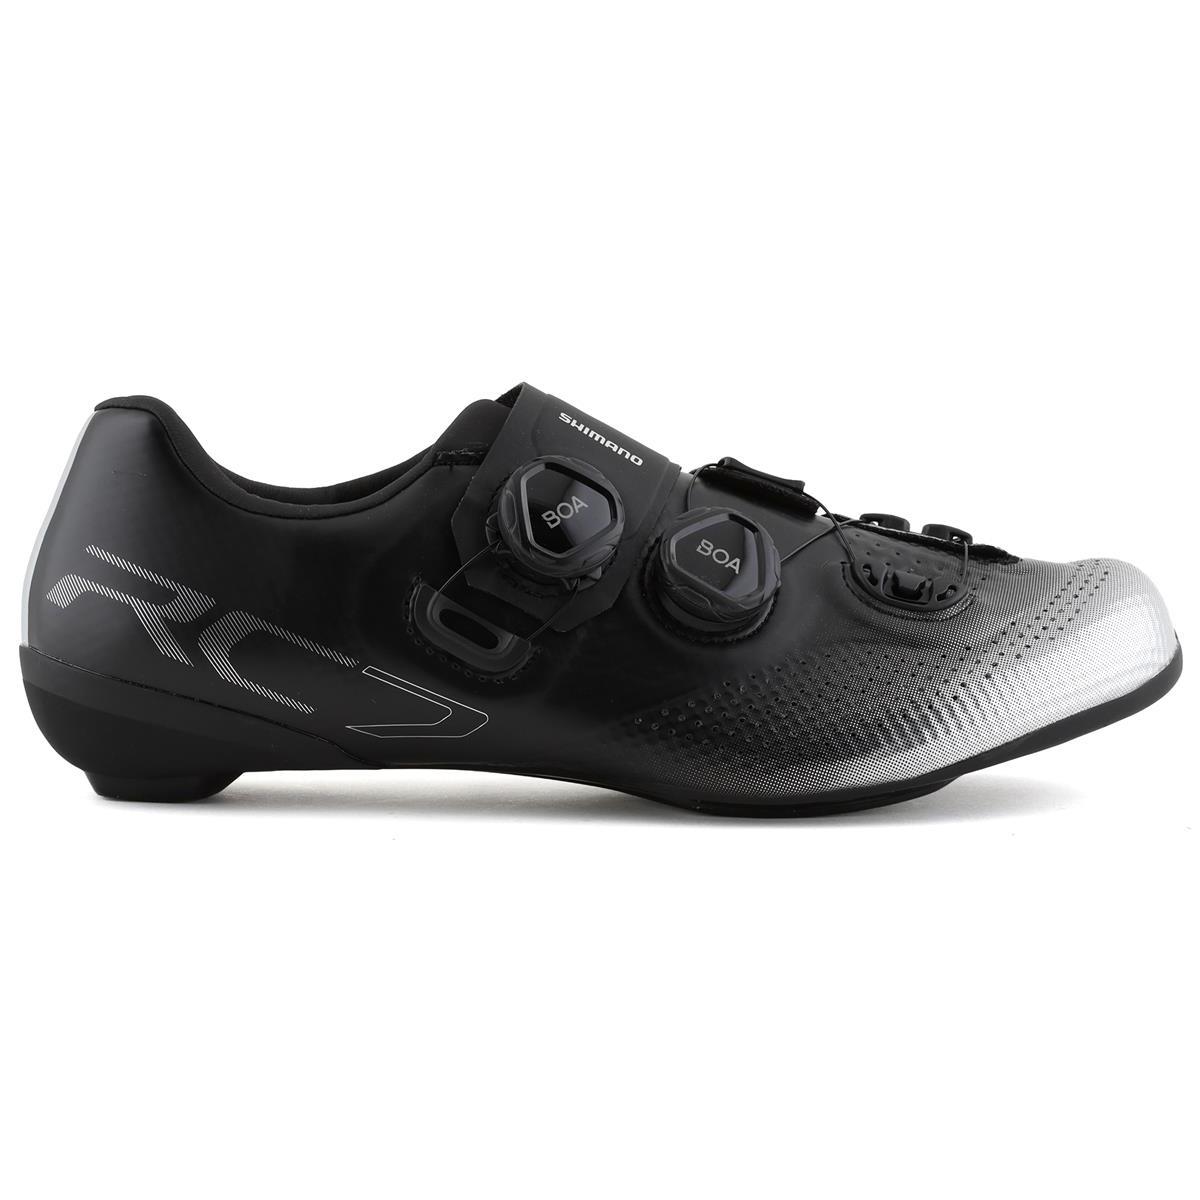 Shimano RC7 Road Bike Shoes Black Standard Width 41.5